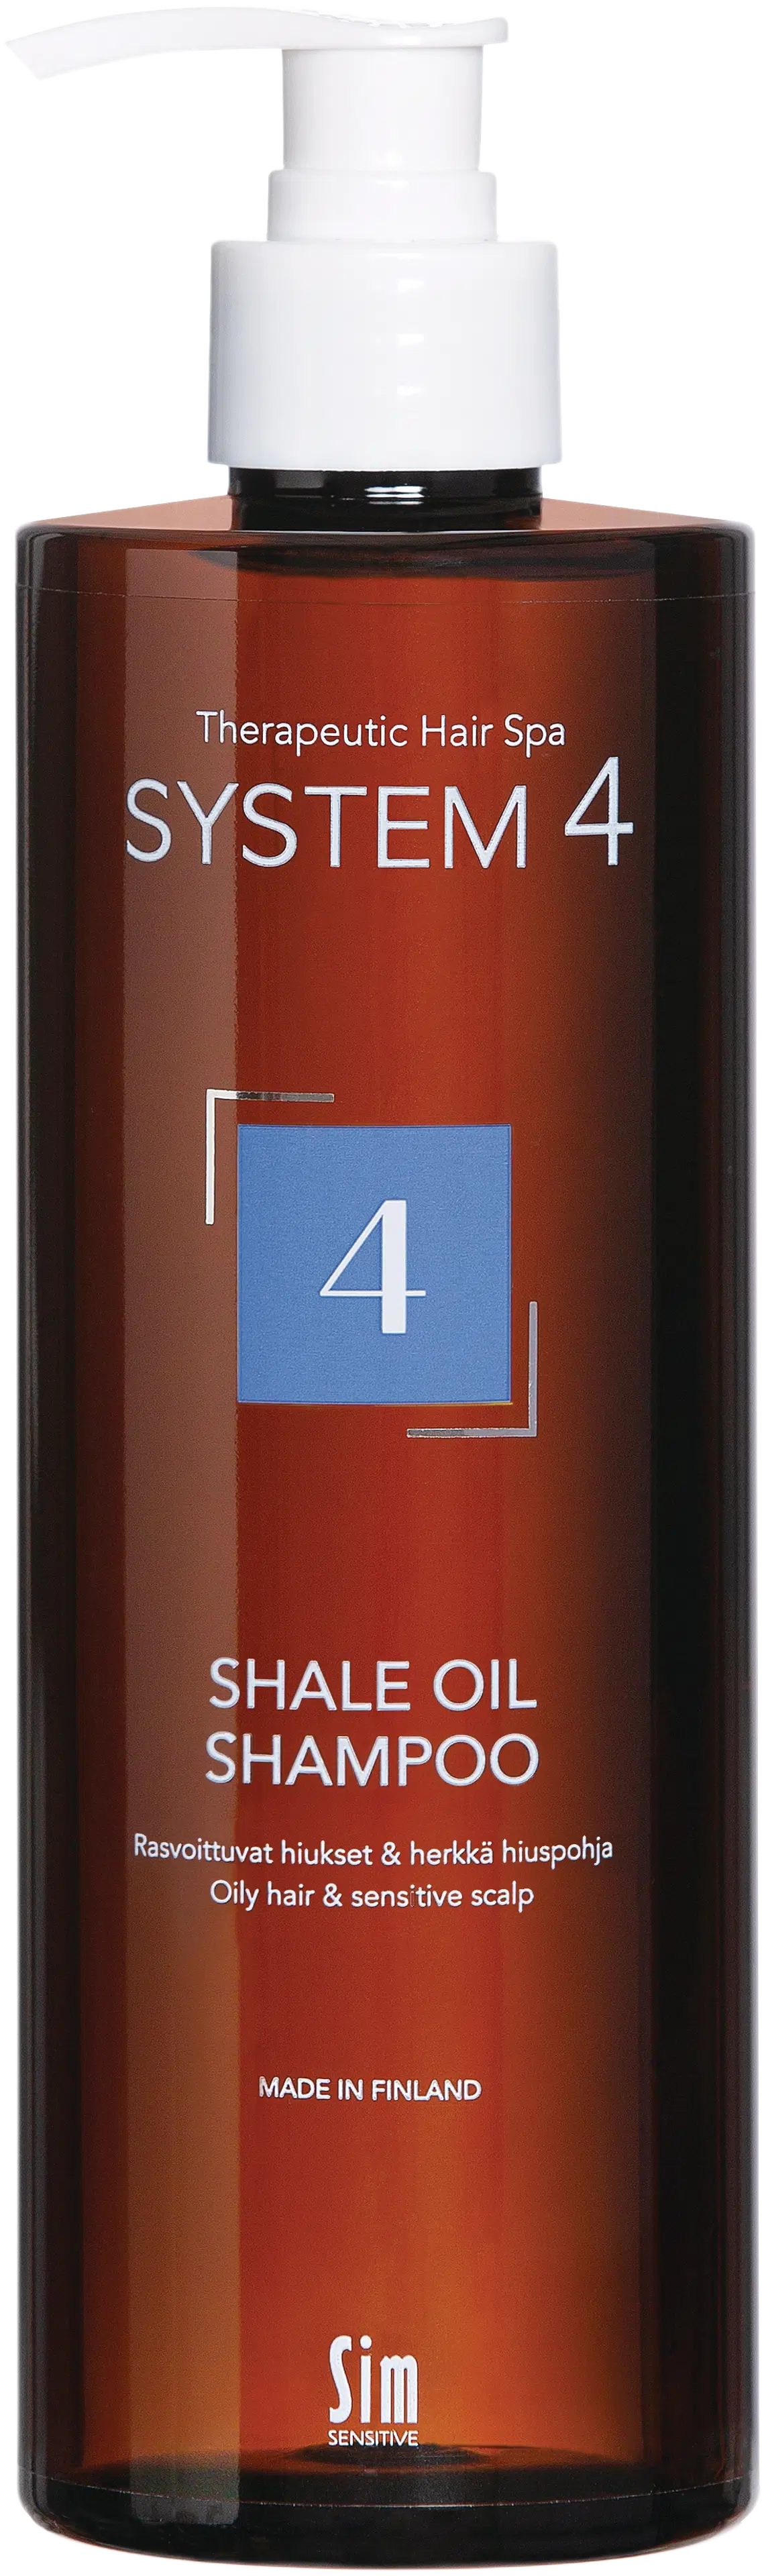 System4, 4 Shale Oil shampoo 500 ml